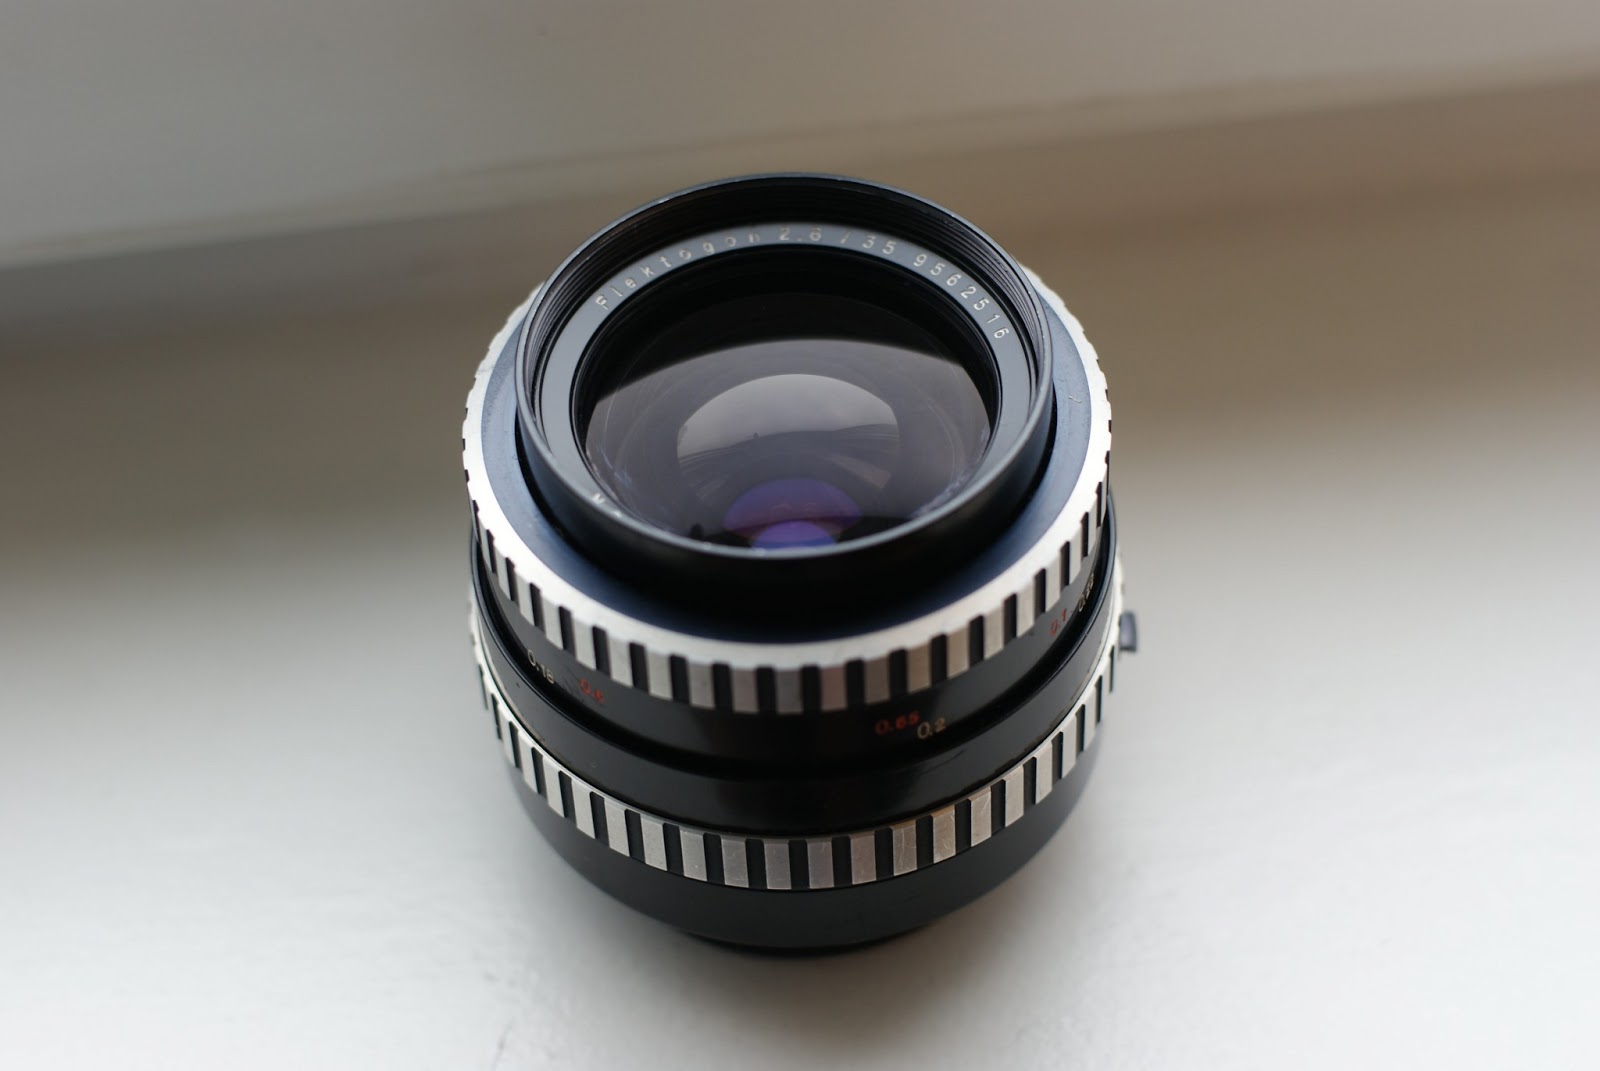 M42 lens - Carl Zeiss Jena, Meyer-Optik Görlitz, Jupiter, Helios